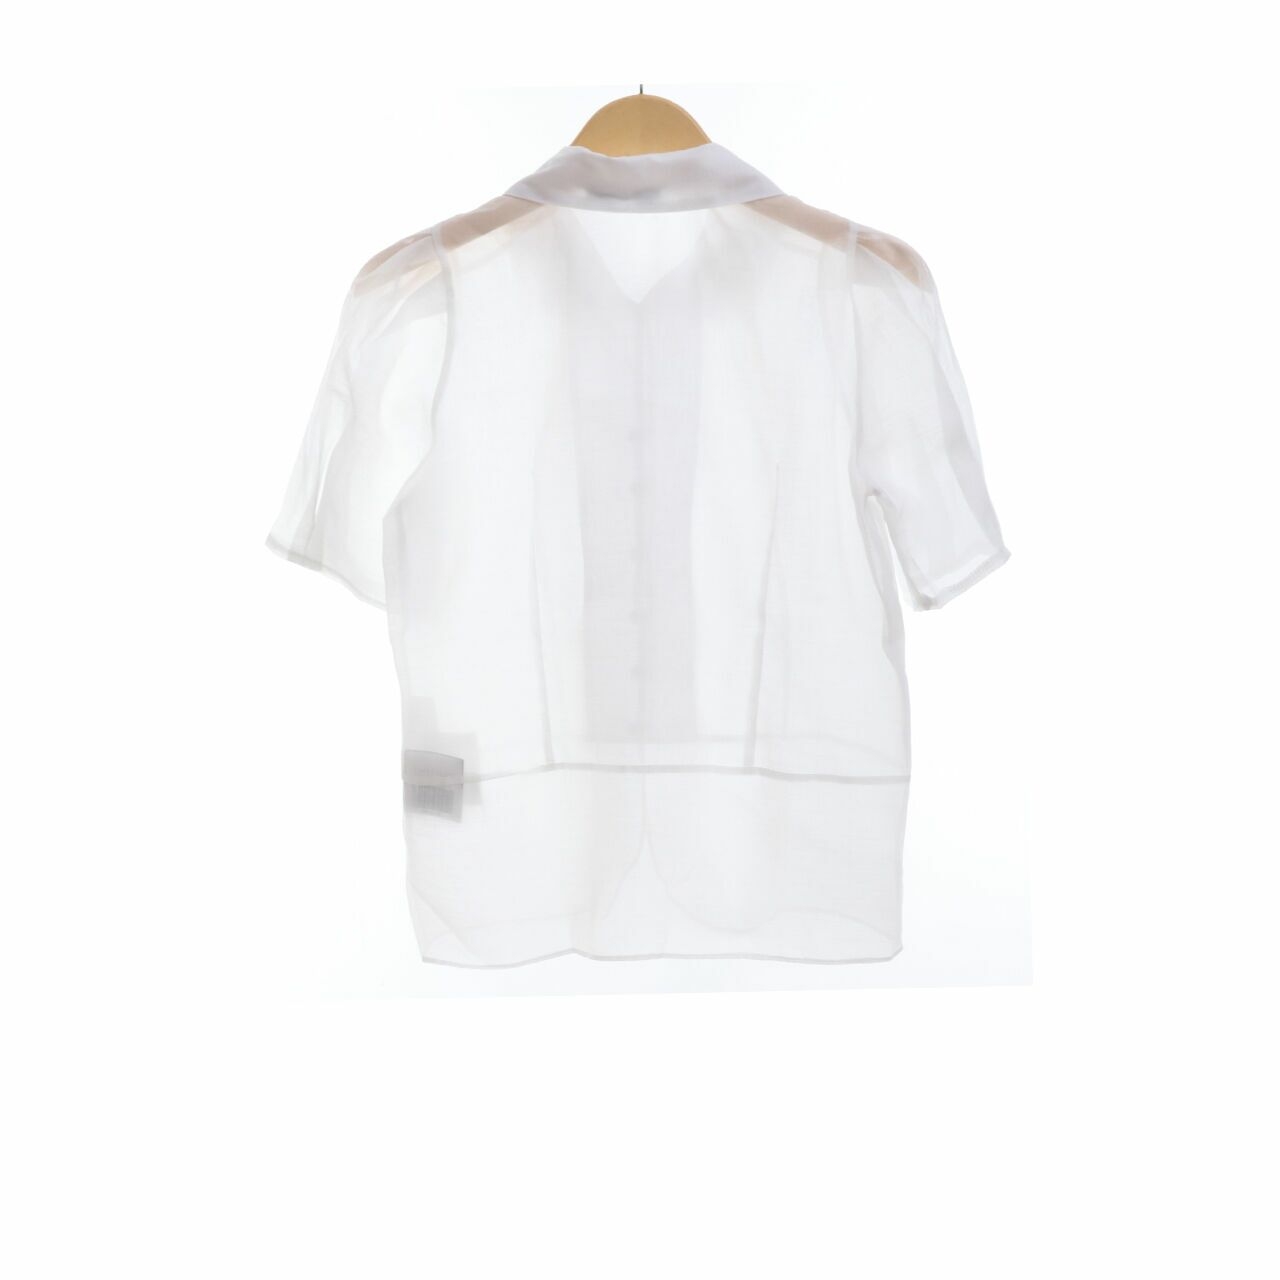 Cre&ade White Shirt